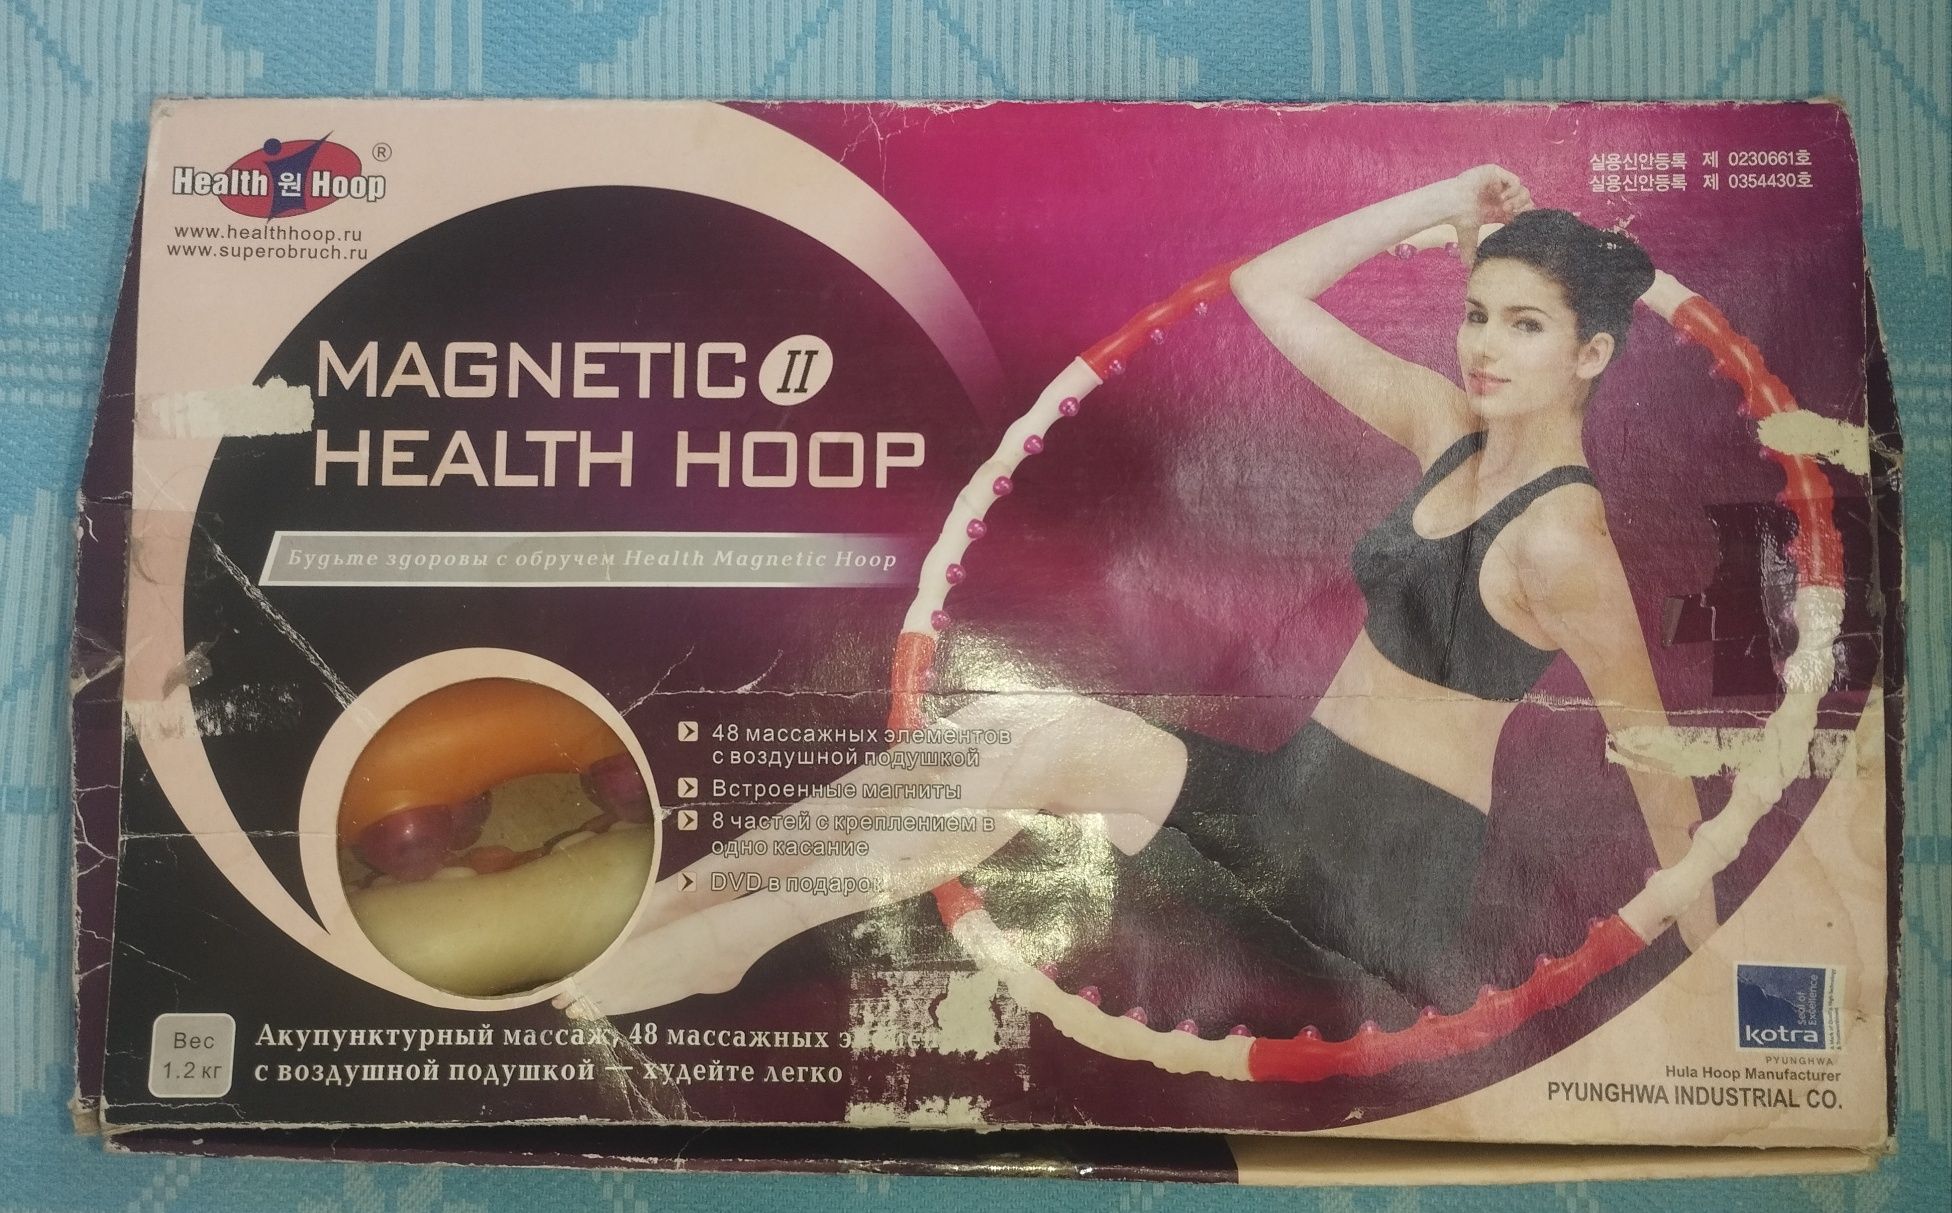 Хулахуп Обруч Magnetic Health Hoop II
ХОбруч Magnetic Health 
Обруч M